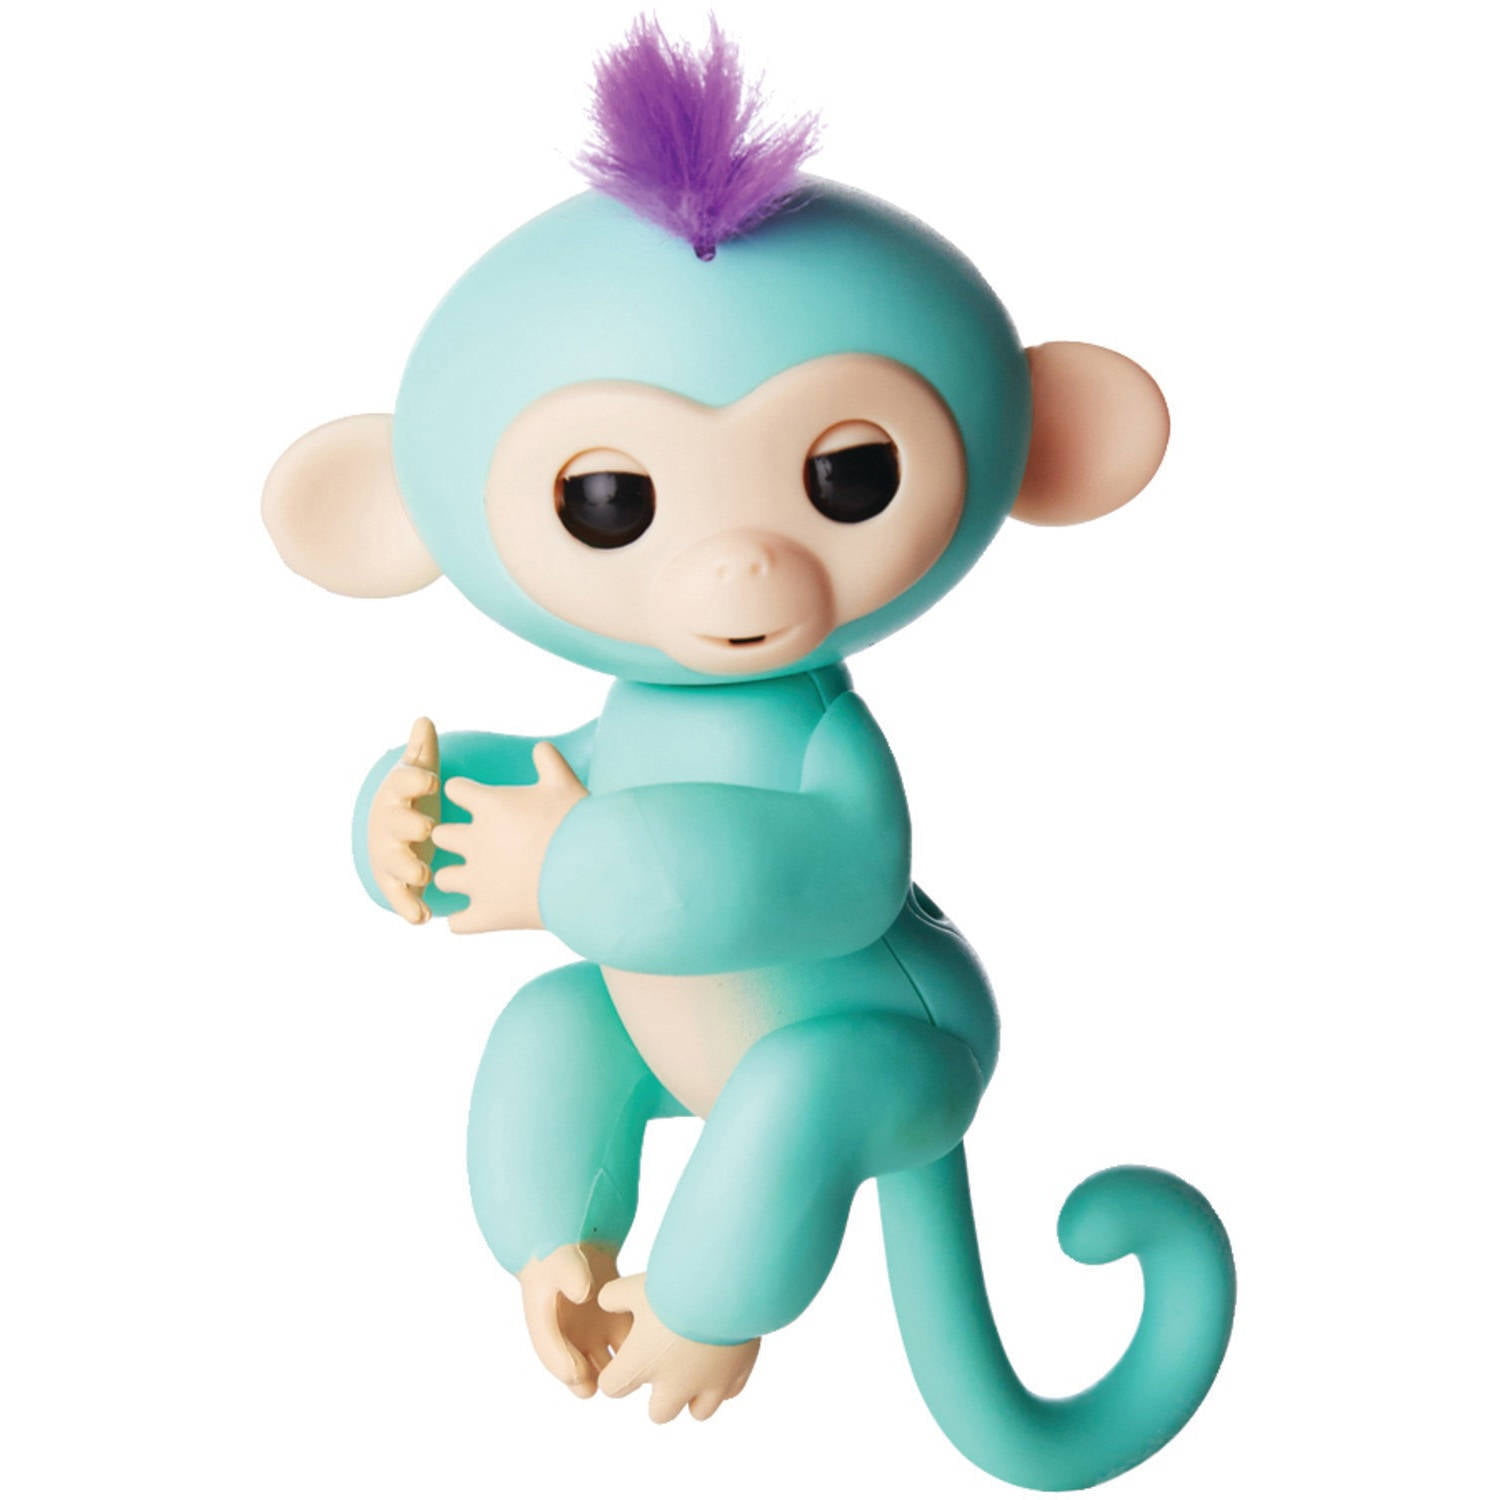 2017 Happy Monkey Interactive Finger Toy Like Fingerling for sale online 